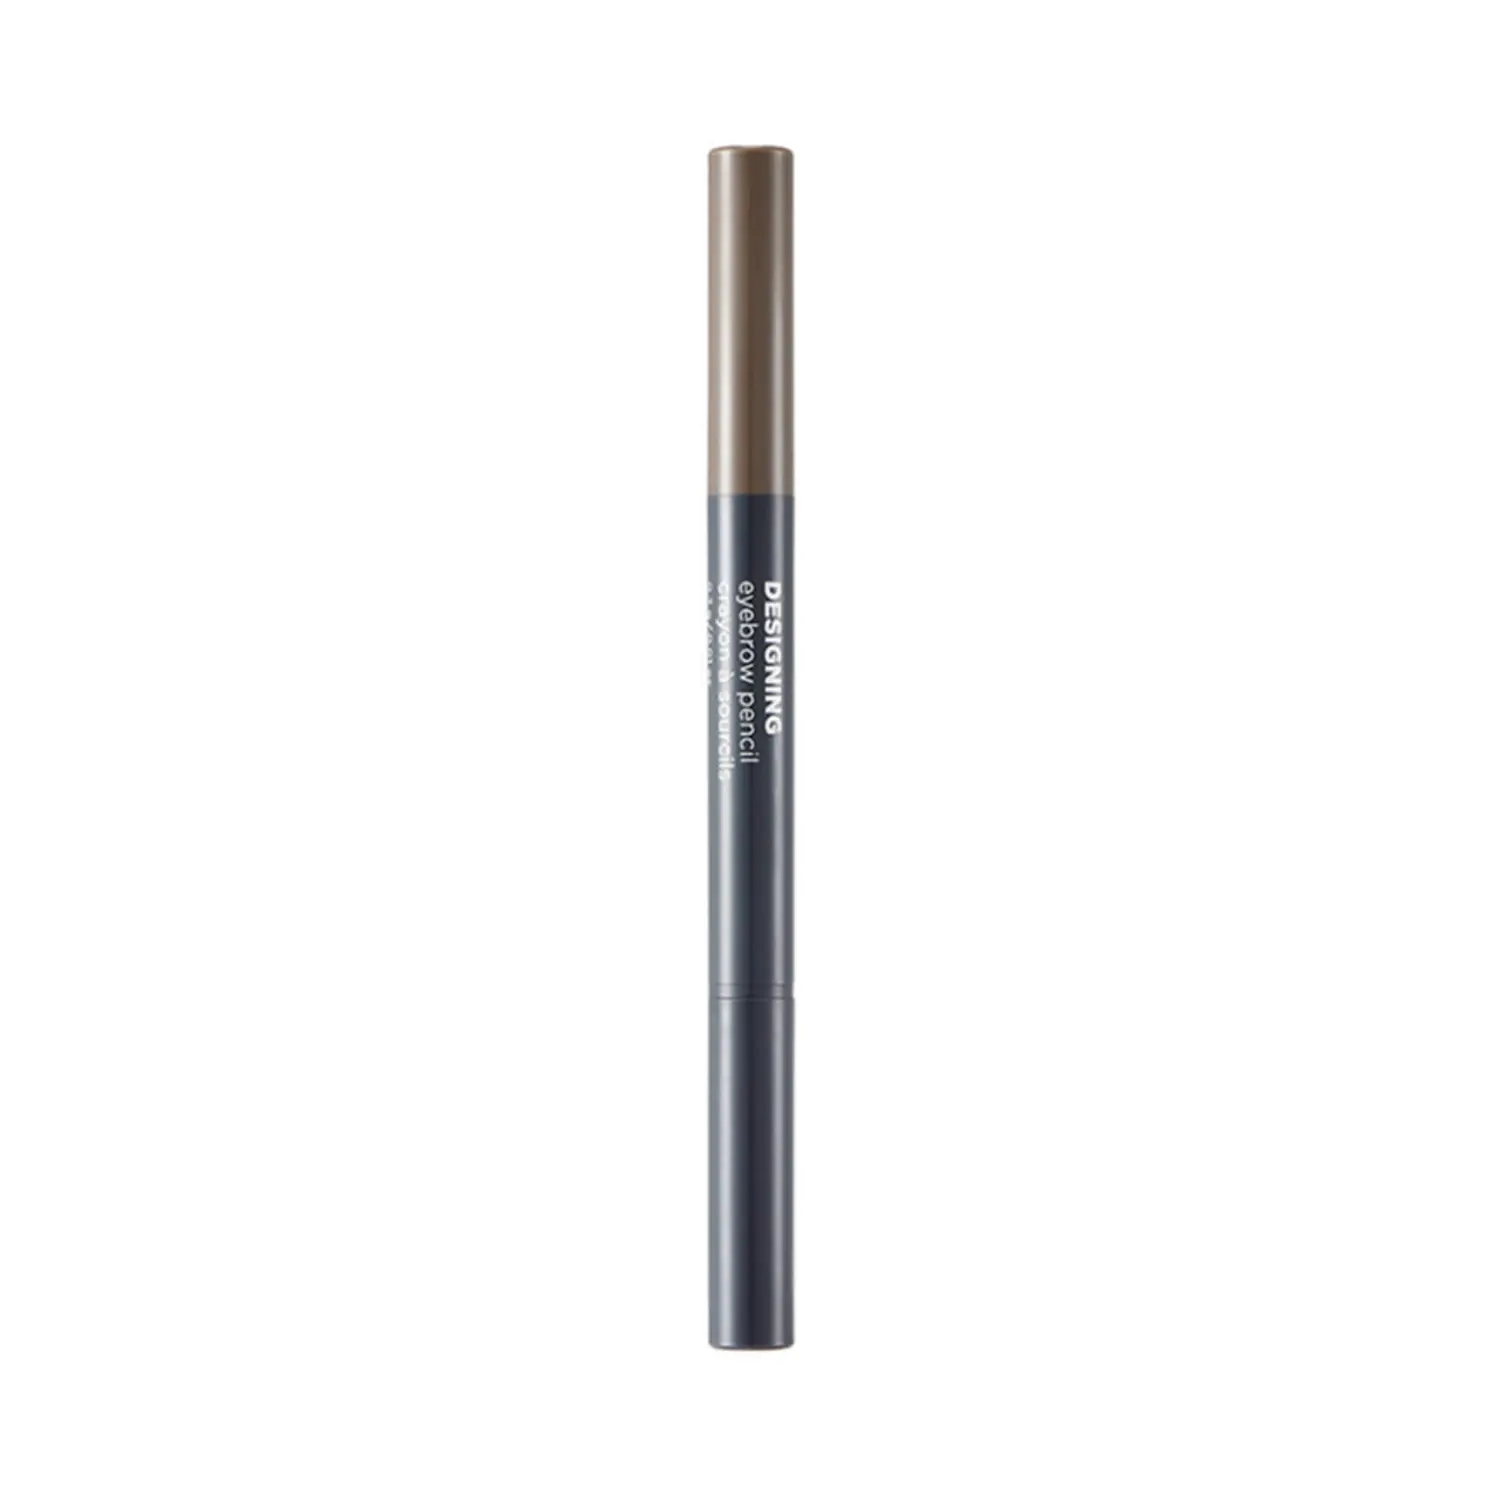 The Face Shop FMGT Designing Eyebrow Pencil - 05 Dark Brown (0.3g)